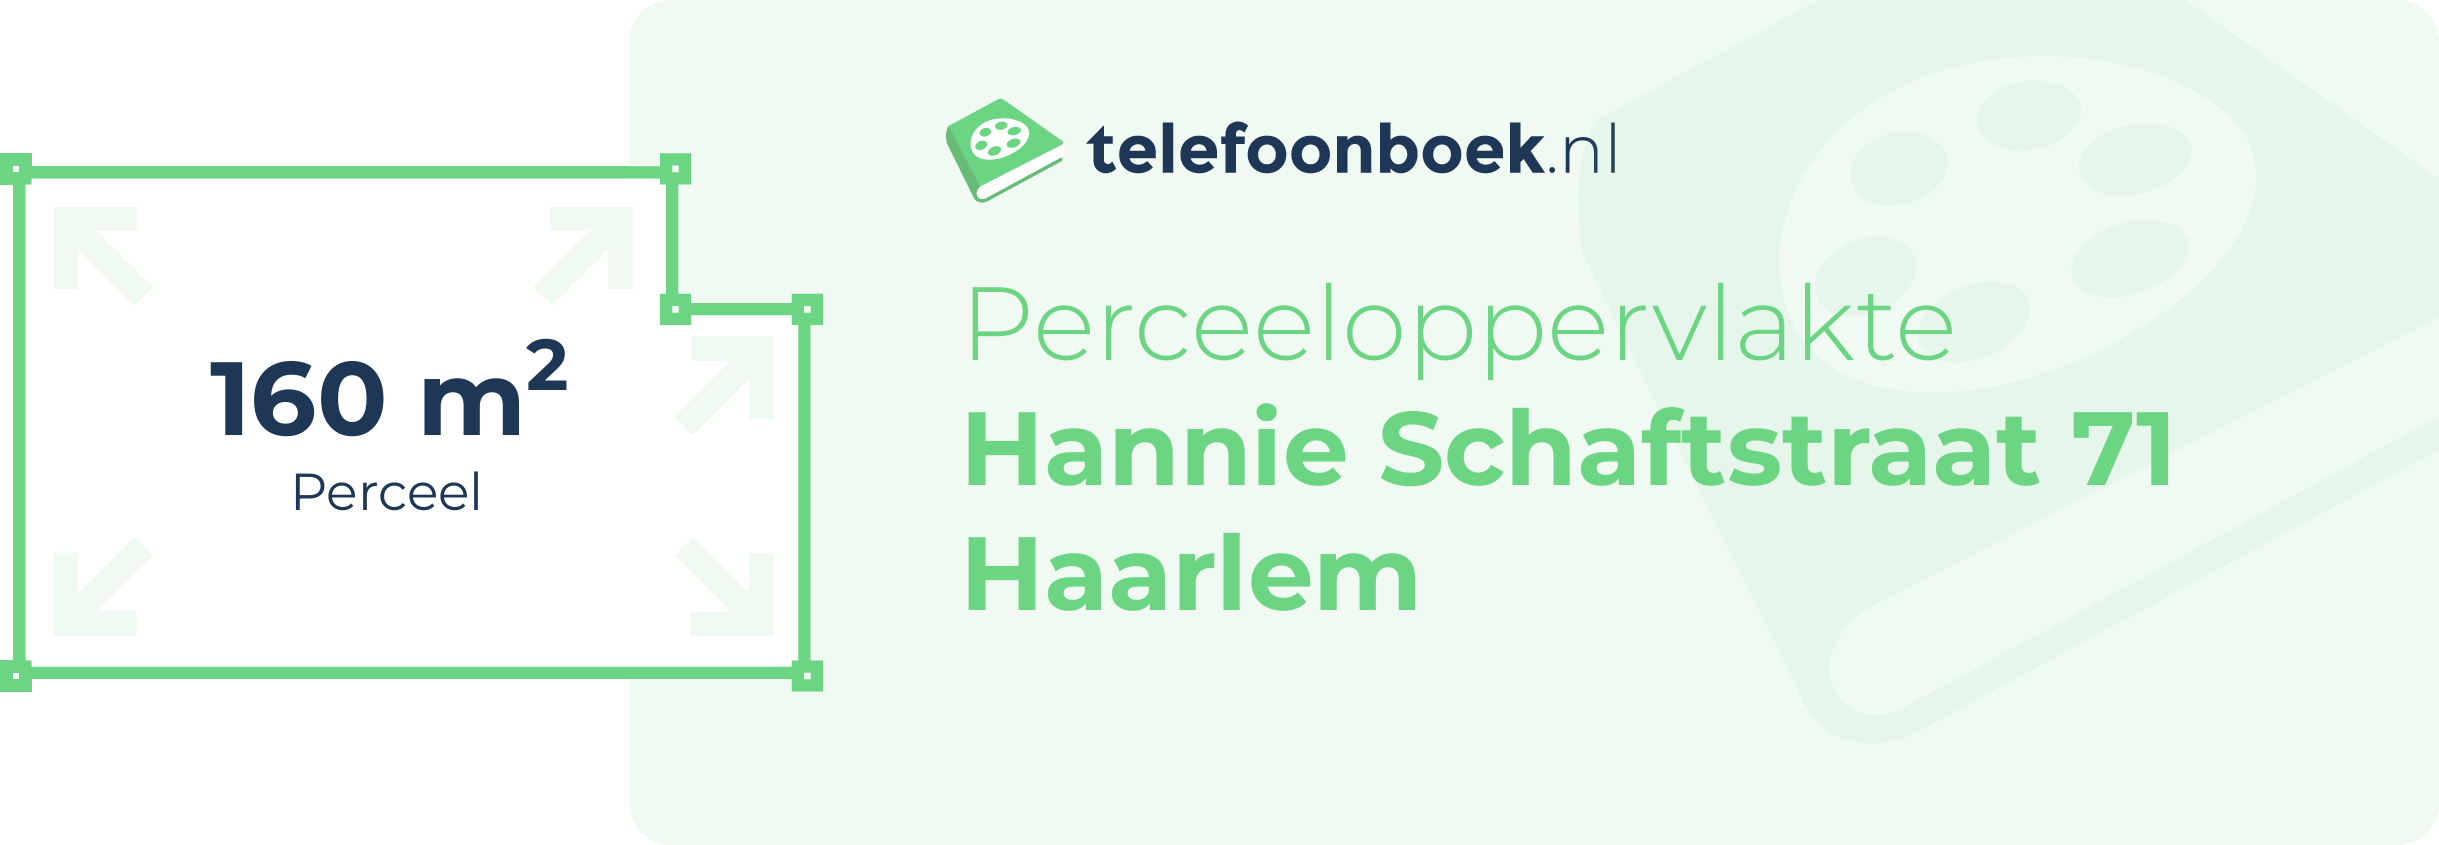 Perceeloppervlakte Hannie Schaftstraat 71 Haarlem